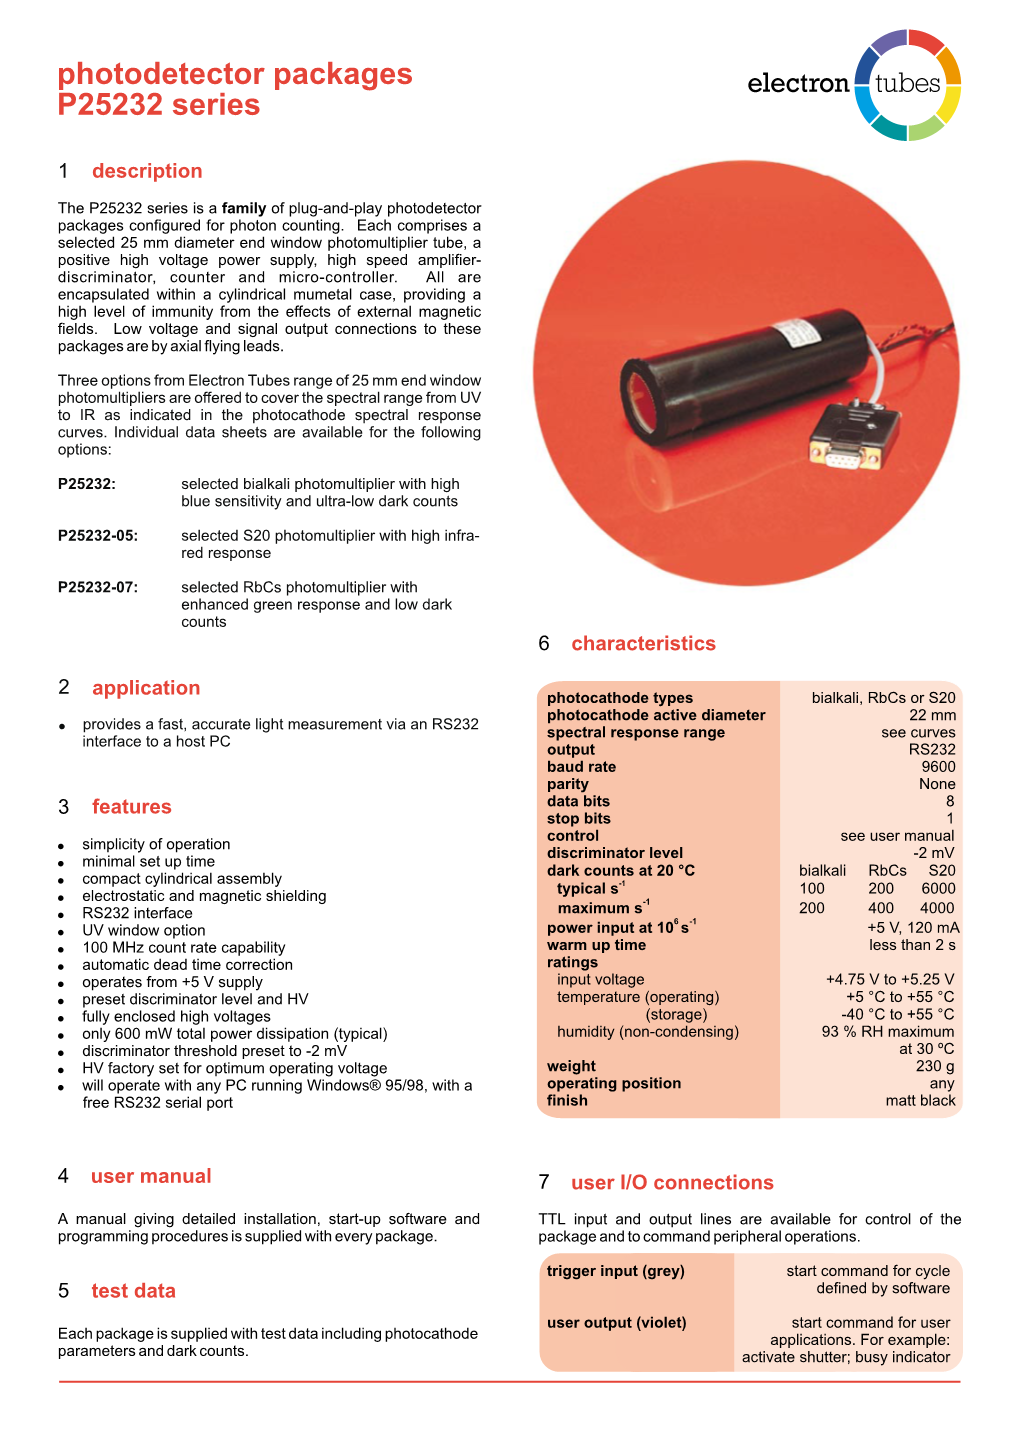 Photodetector Packages P25232 Series